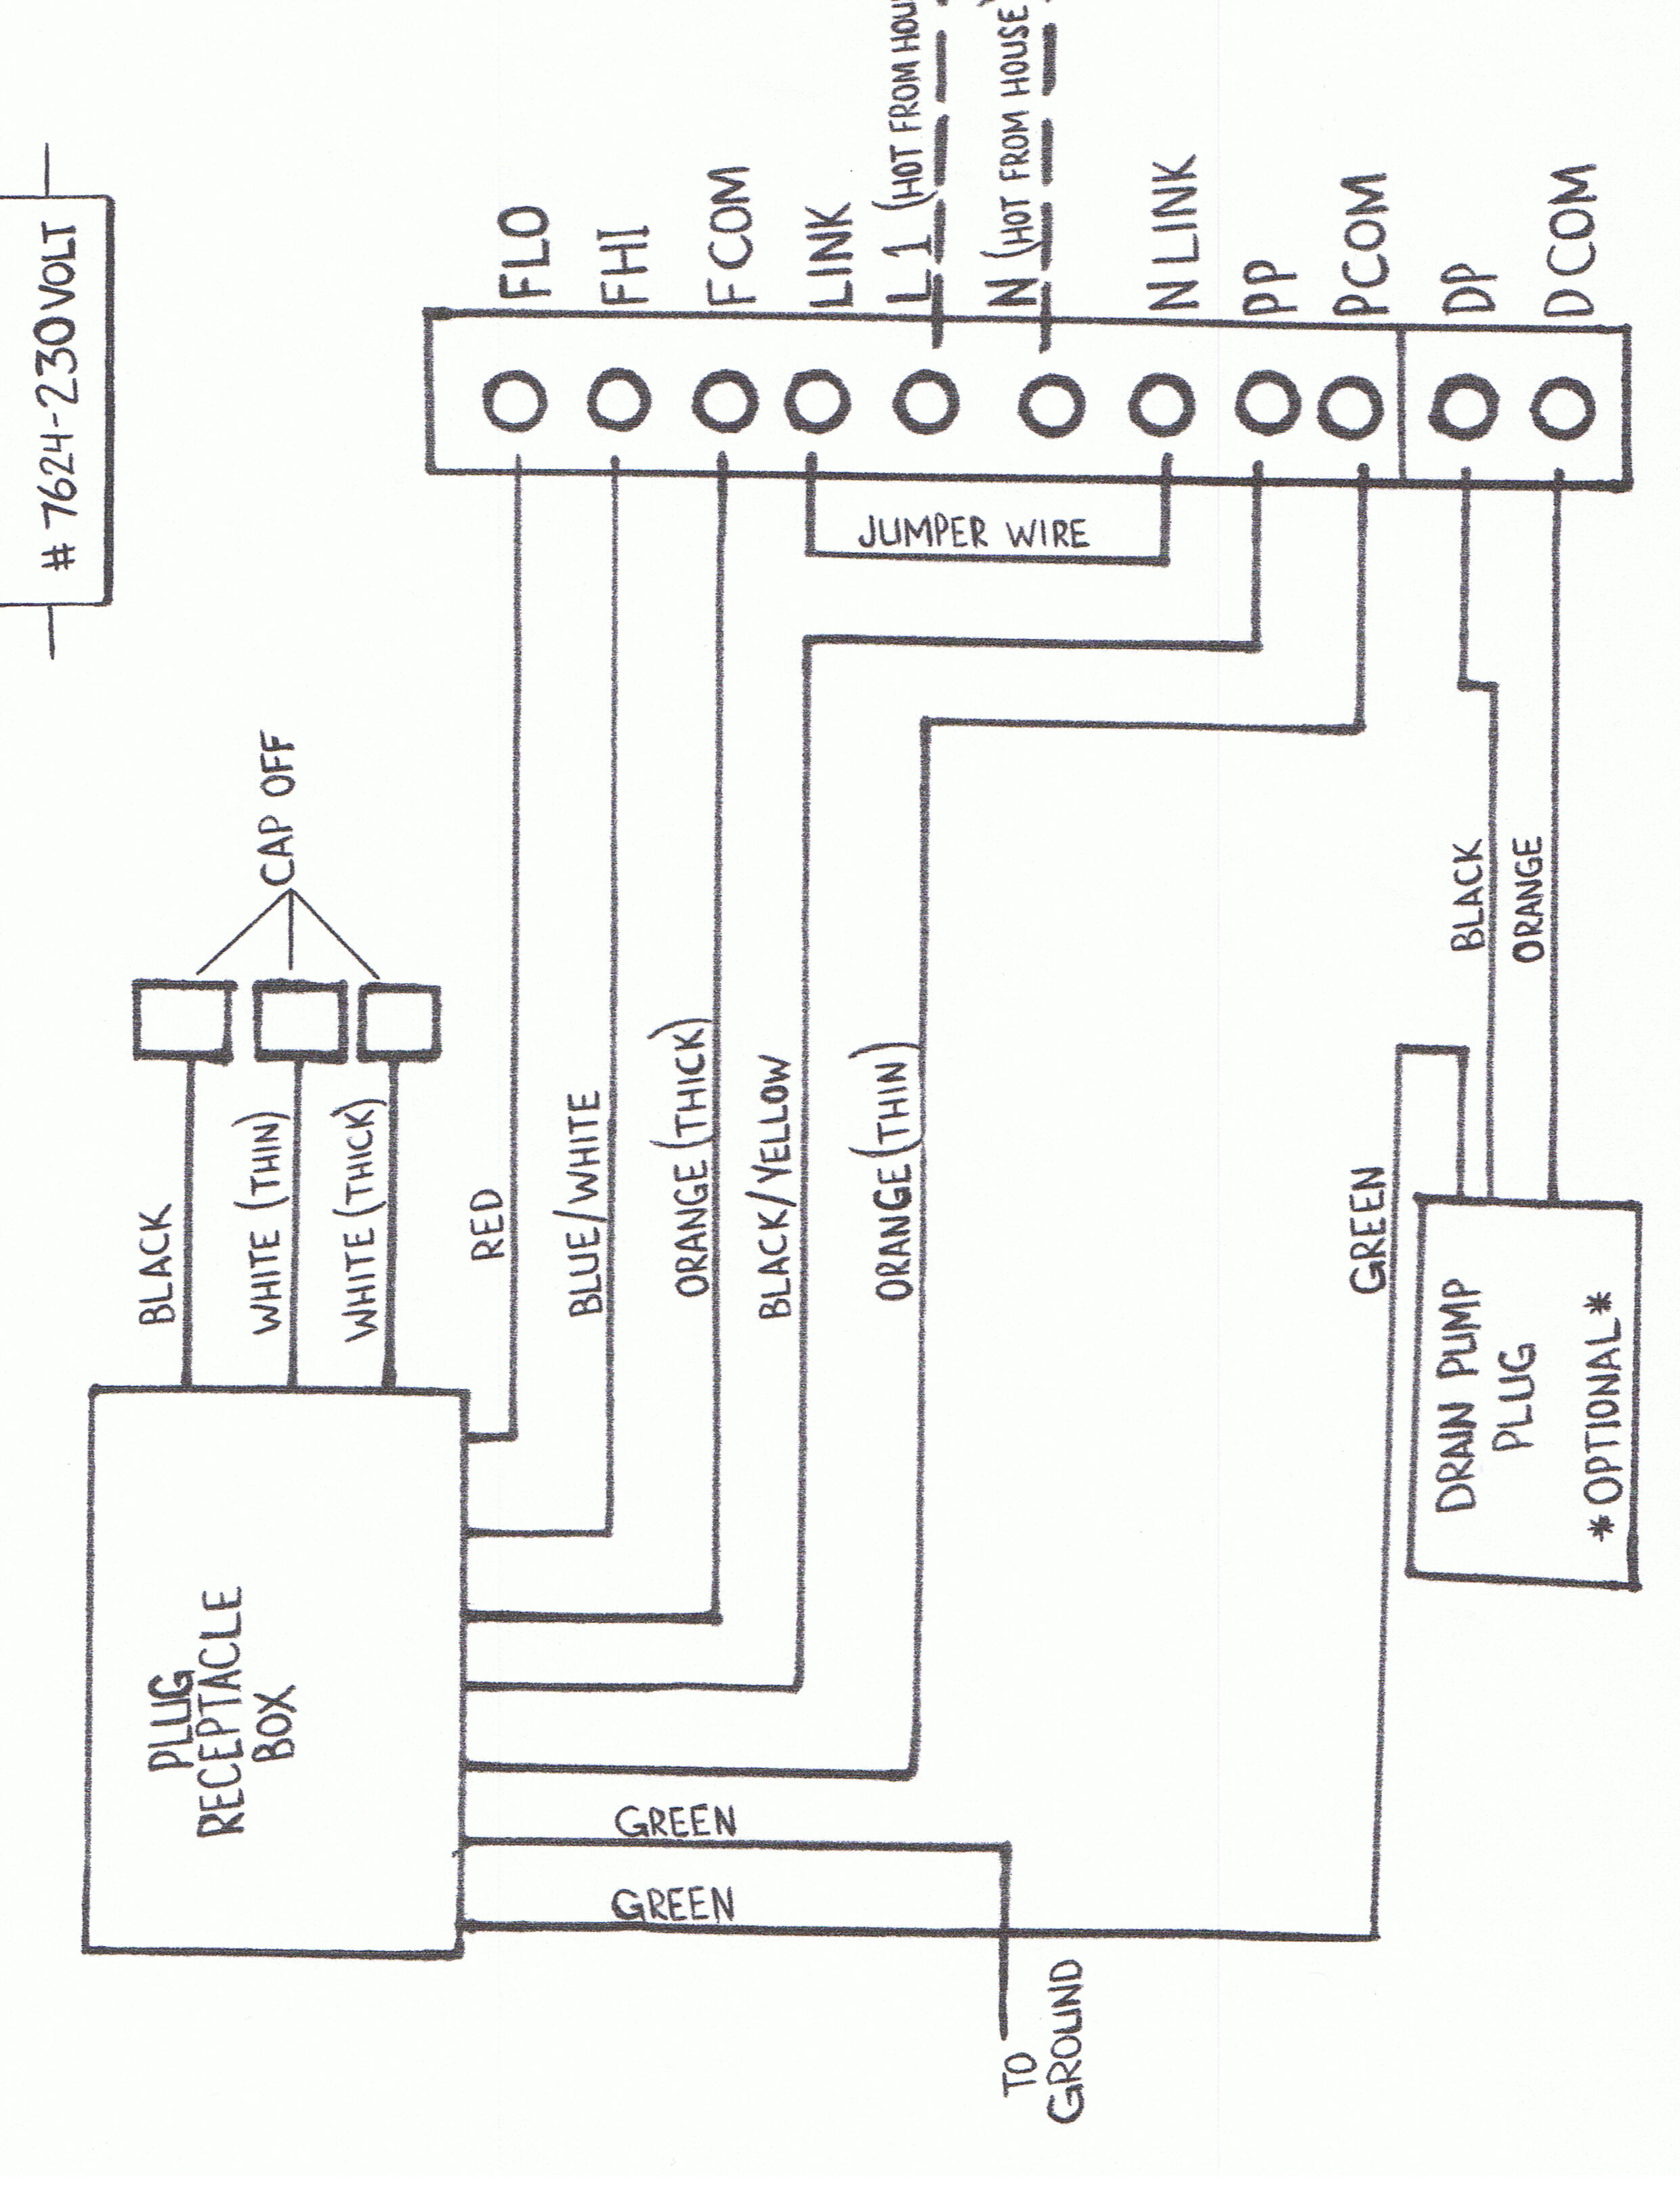 Swamp Cooler Switch Wiring Diagram | Wiring Diagram - Swamp Cooler Switch Wiring Diagram